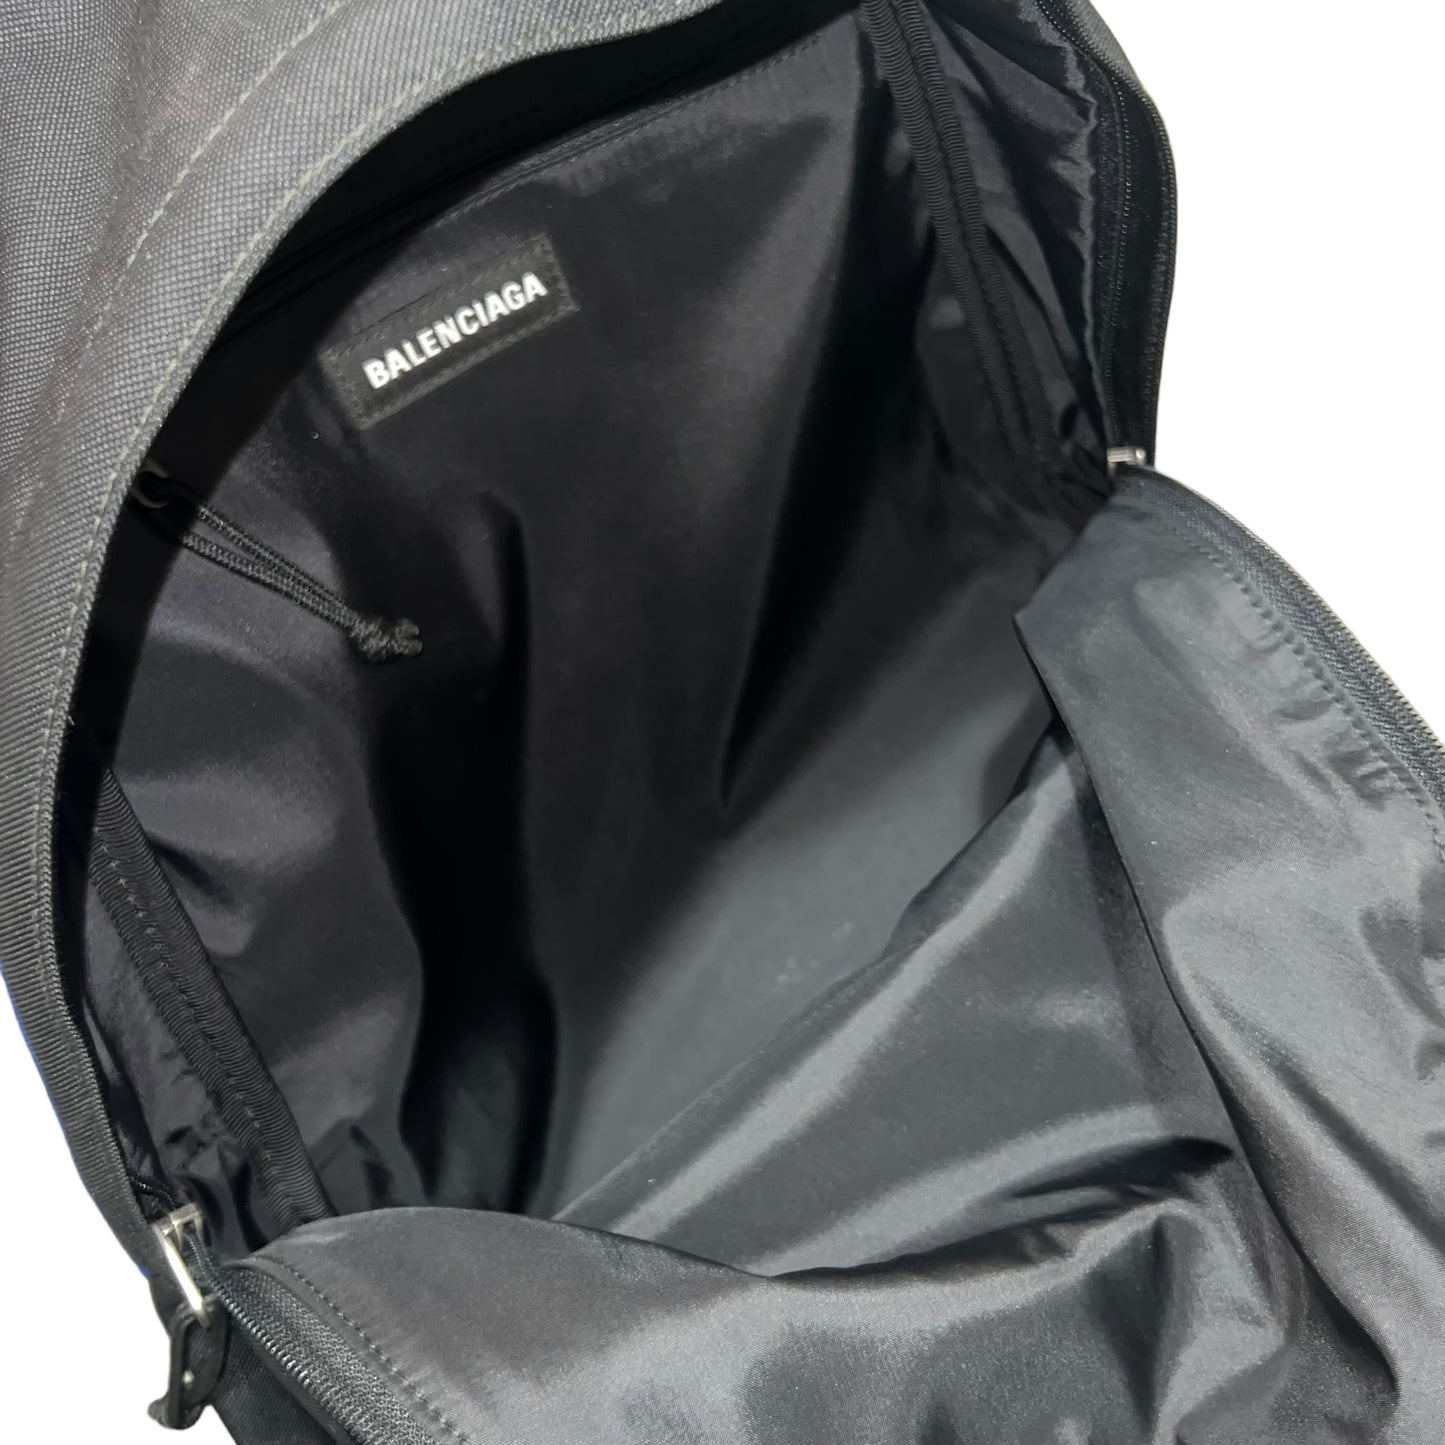 Balenciaga 20SS Black/Blue Canvas Double Backpack Bag